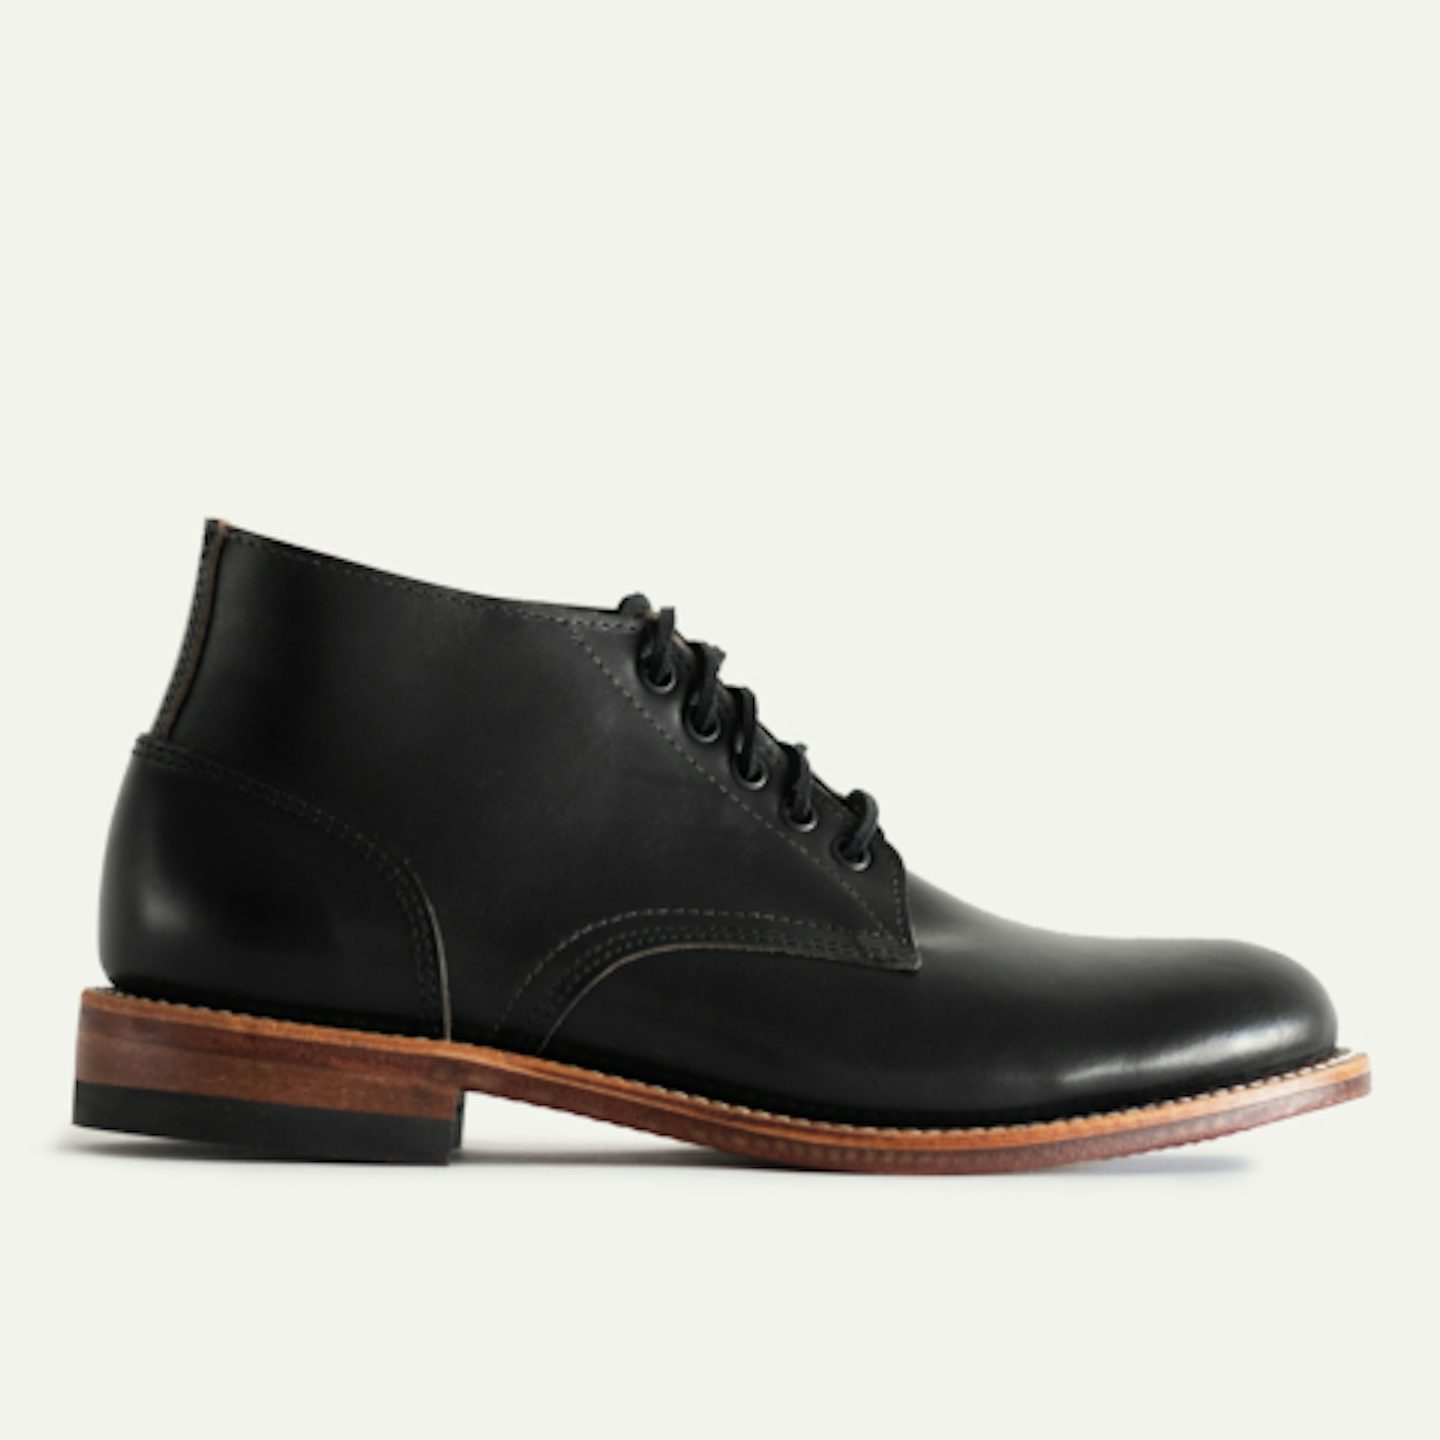 leather sole chukka